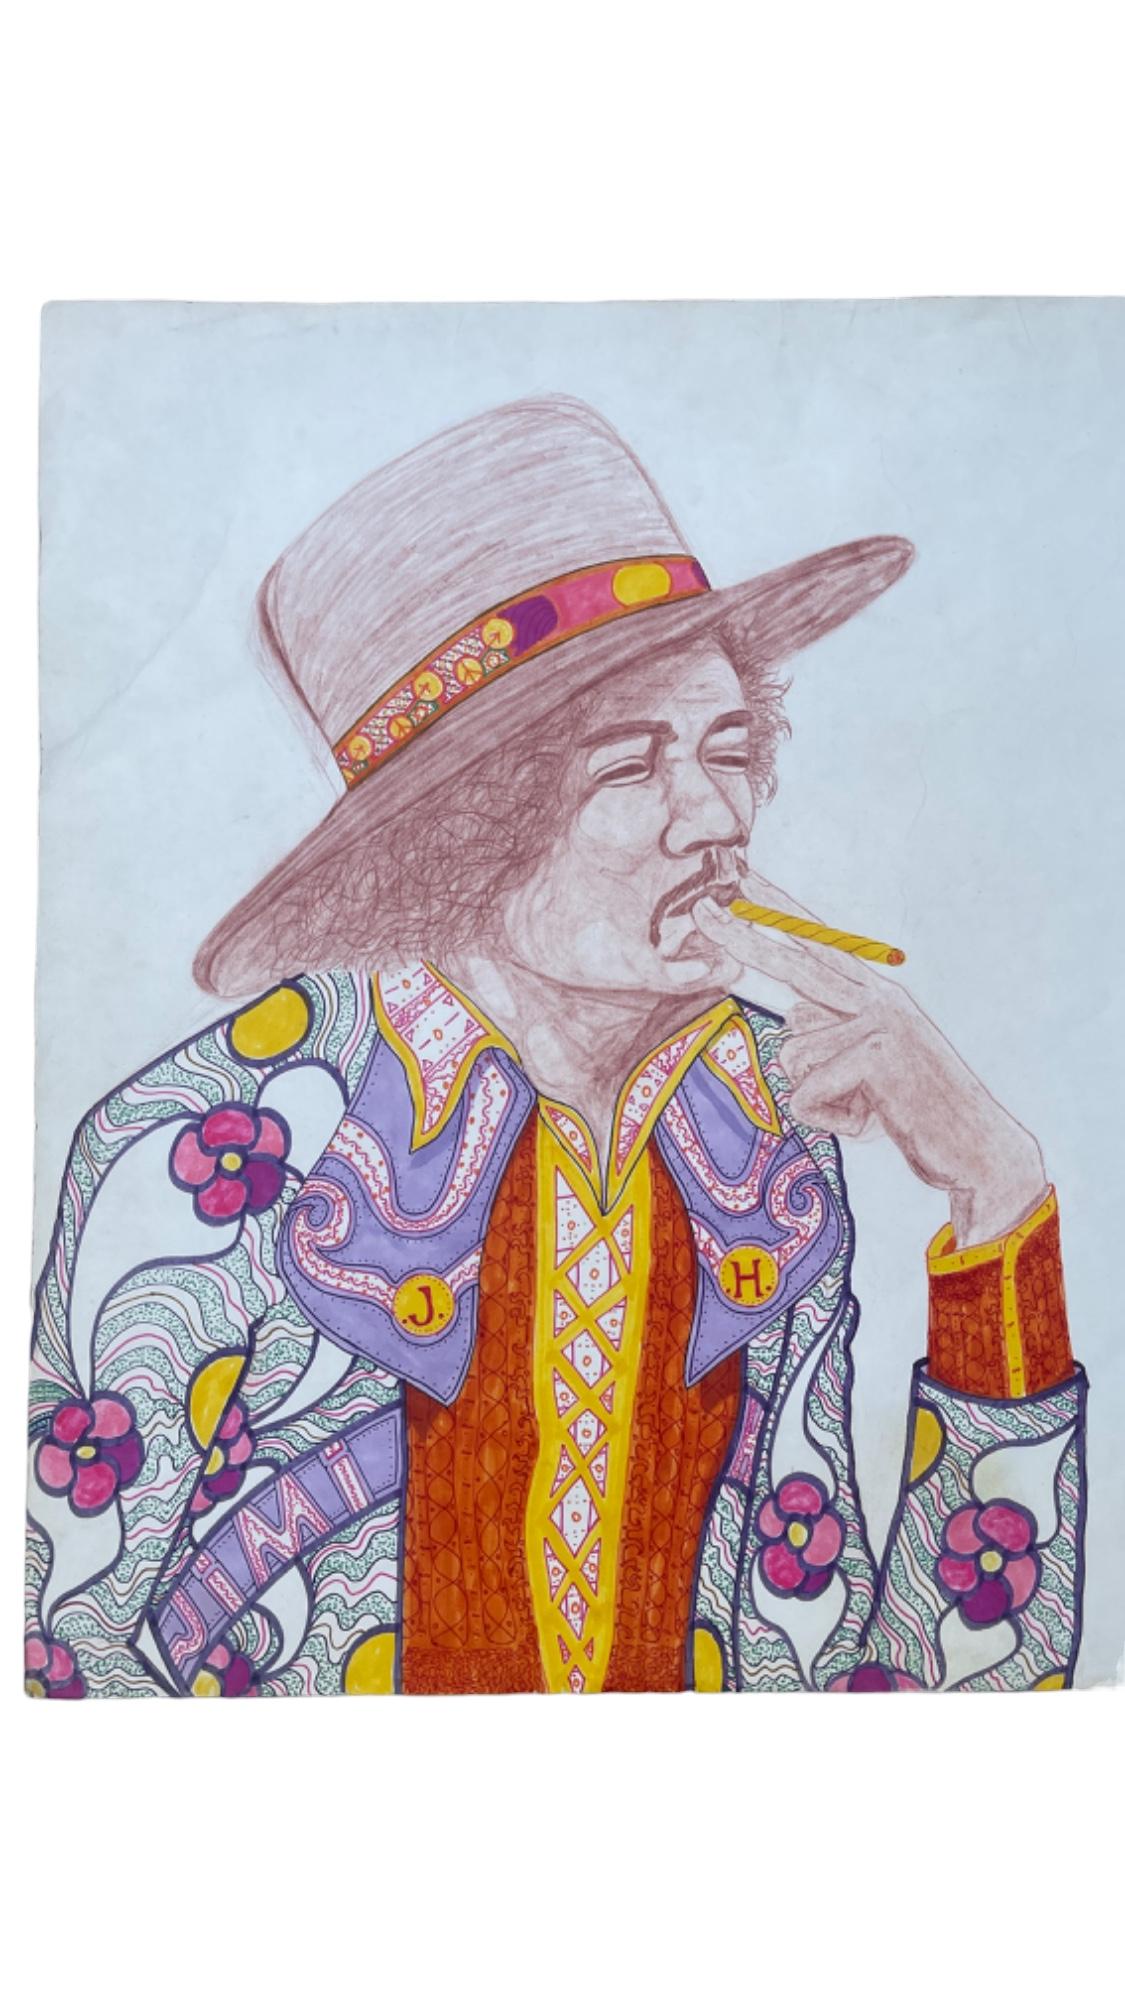 Rare Jimi Hendrix Hand-Signed Illustration Art Drawing